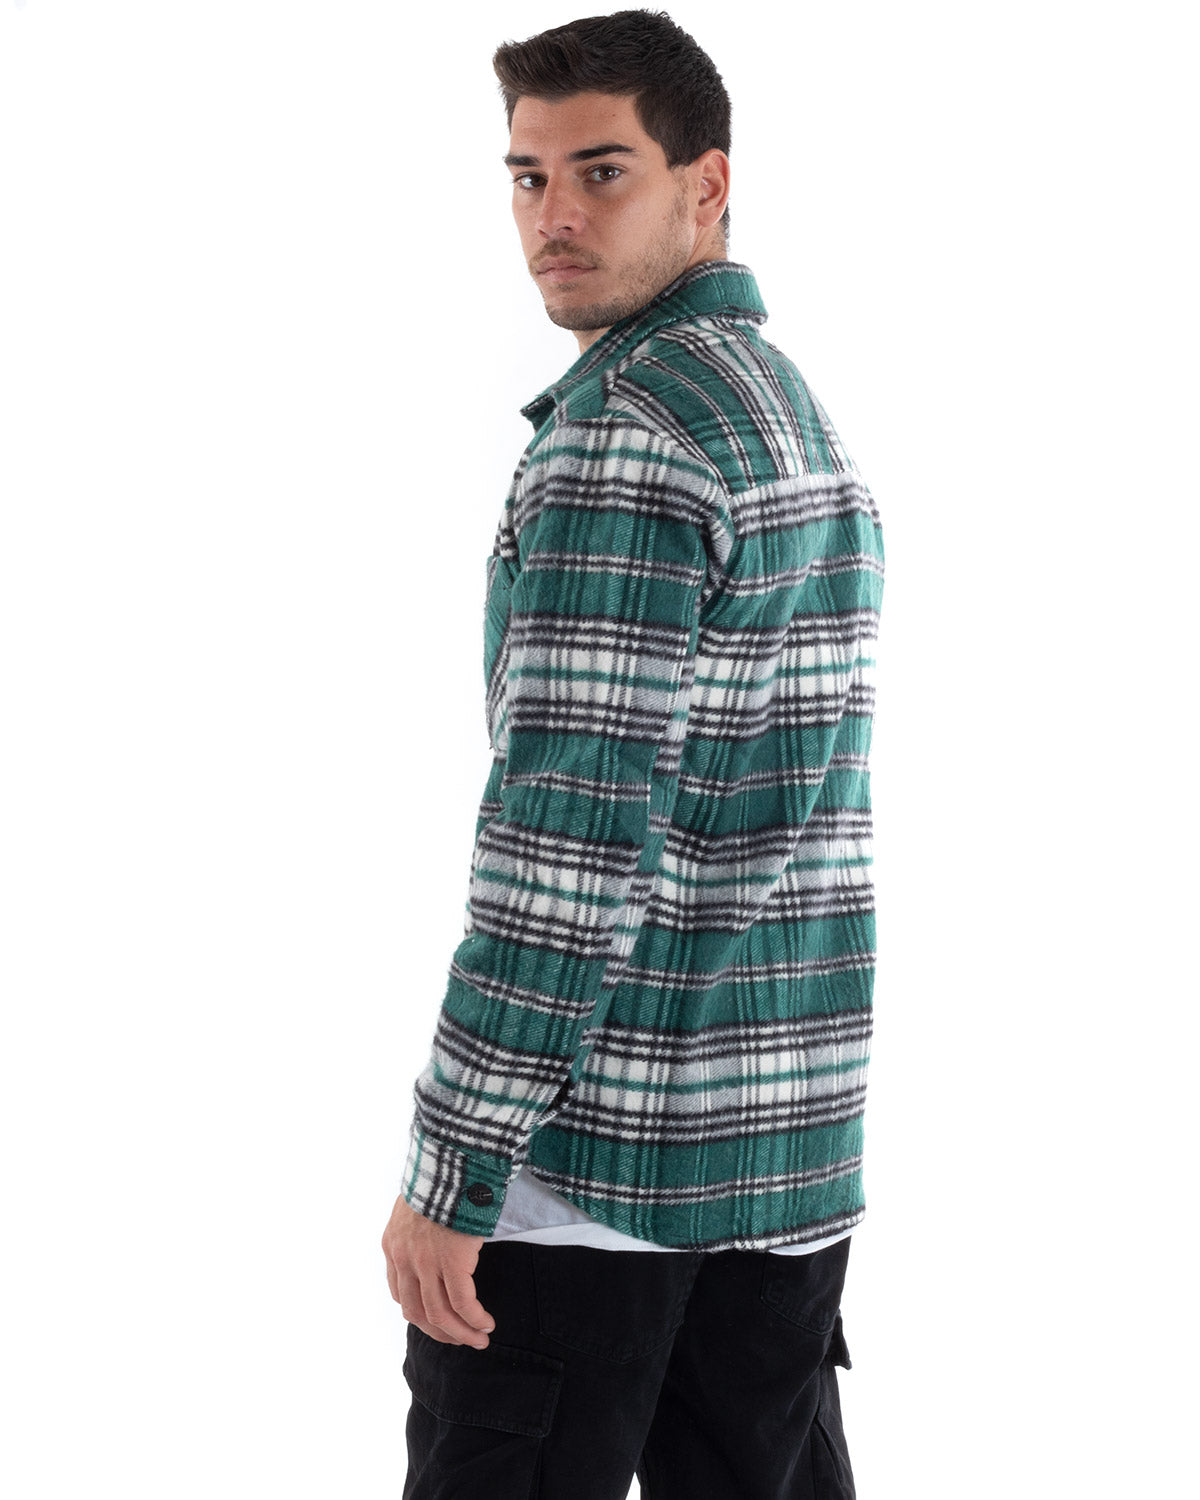 Men's Shirt Shirt With Warm Collar Green Scottish Check Pattern GIOSAL-C2648A